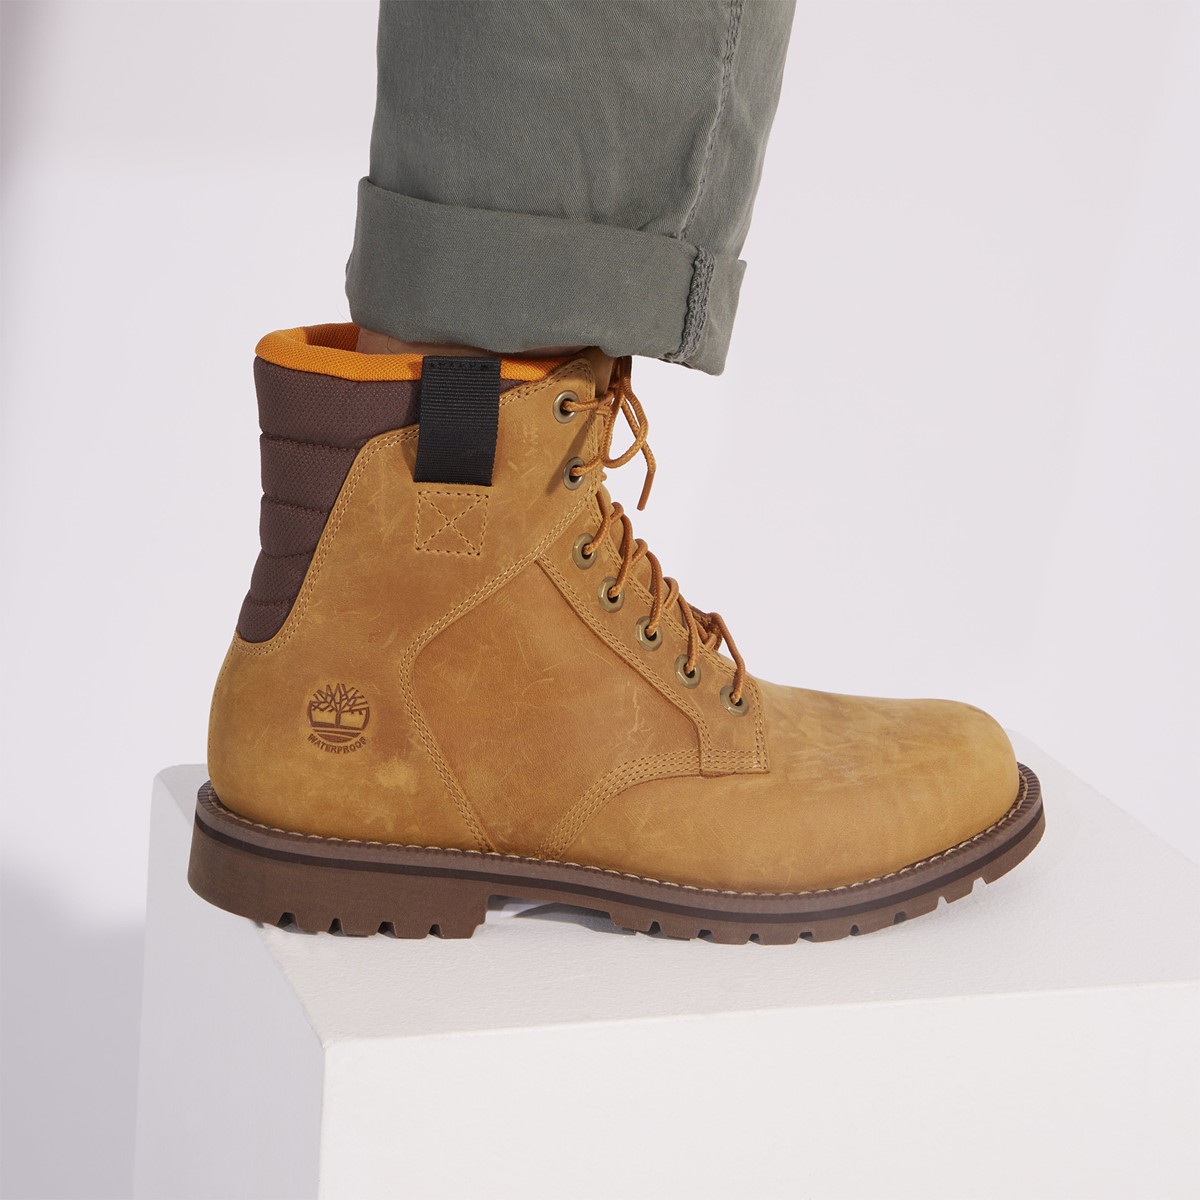 Men's Redwood Falls Waterproof Insulated Boots in Brown